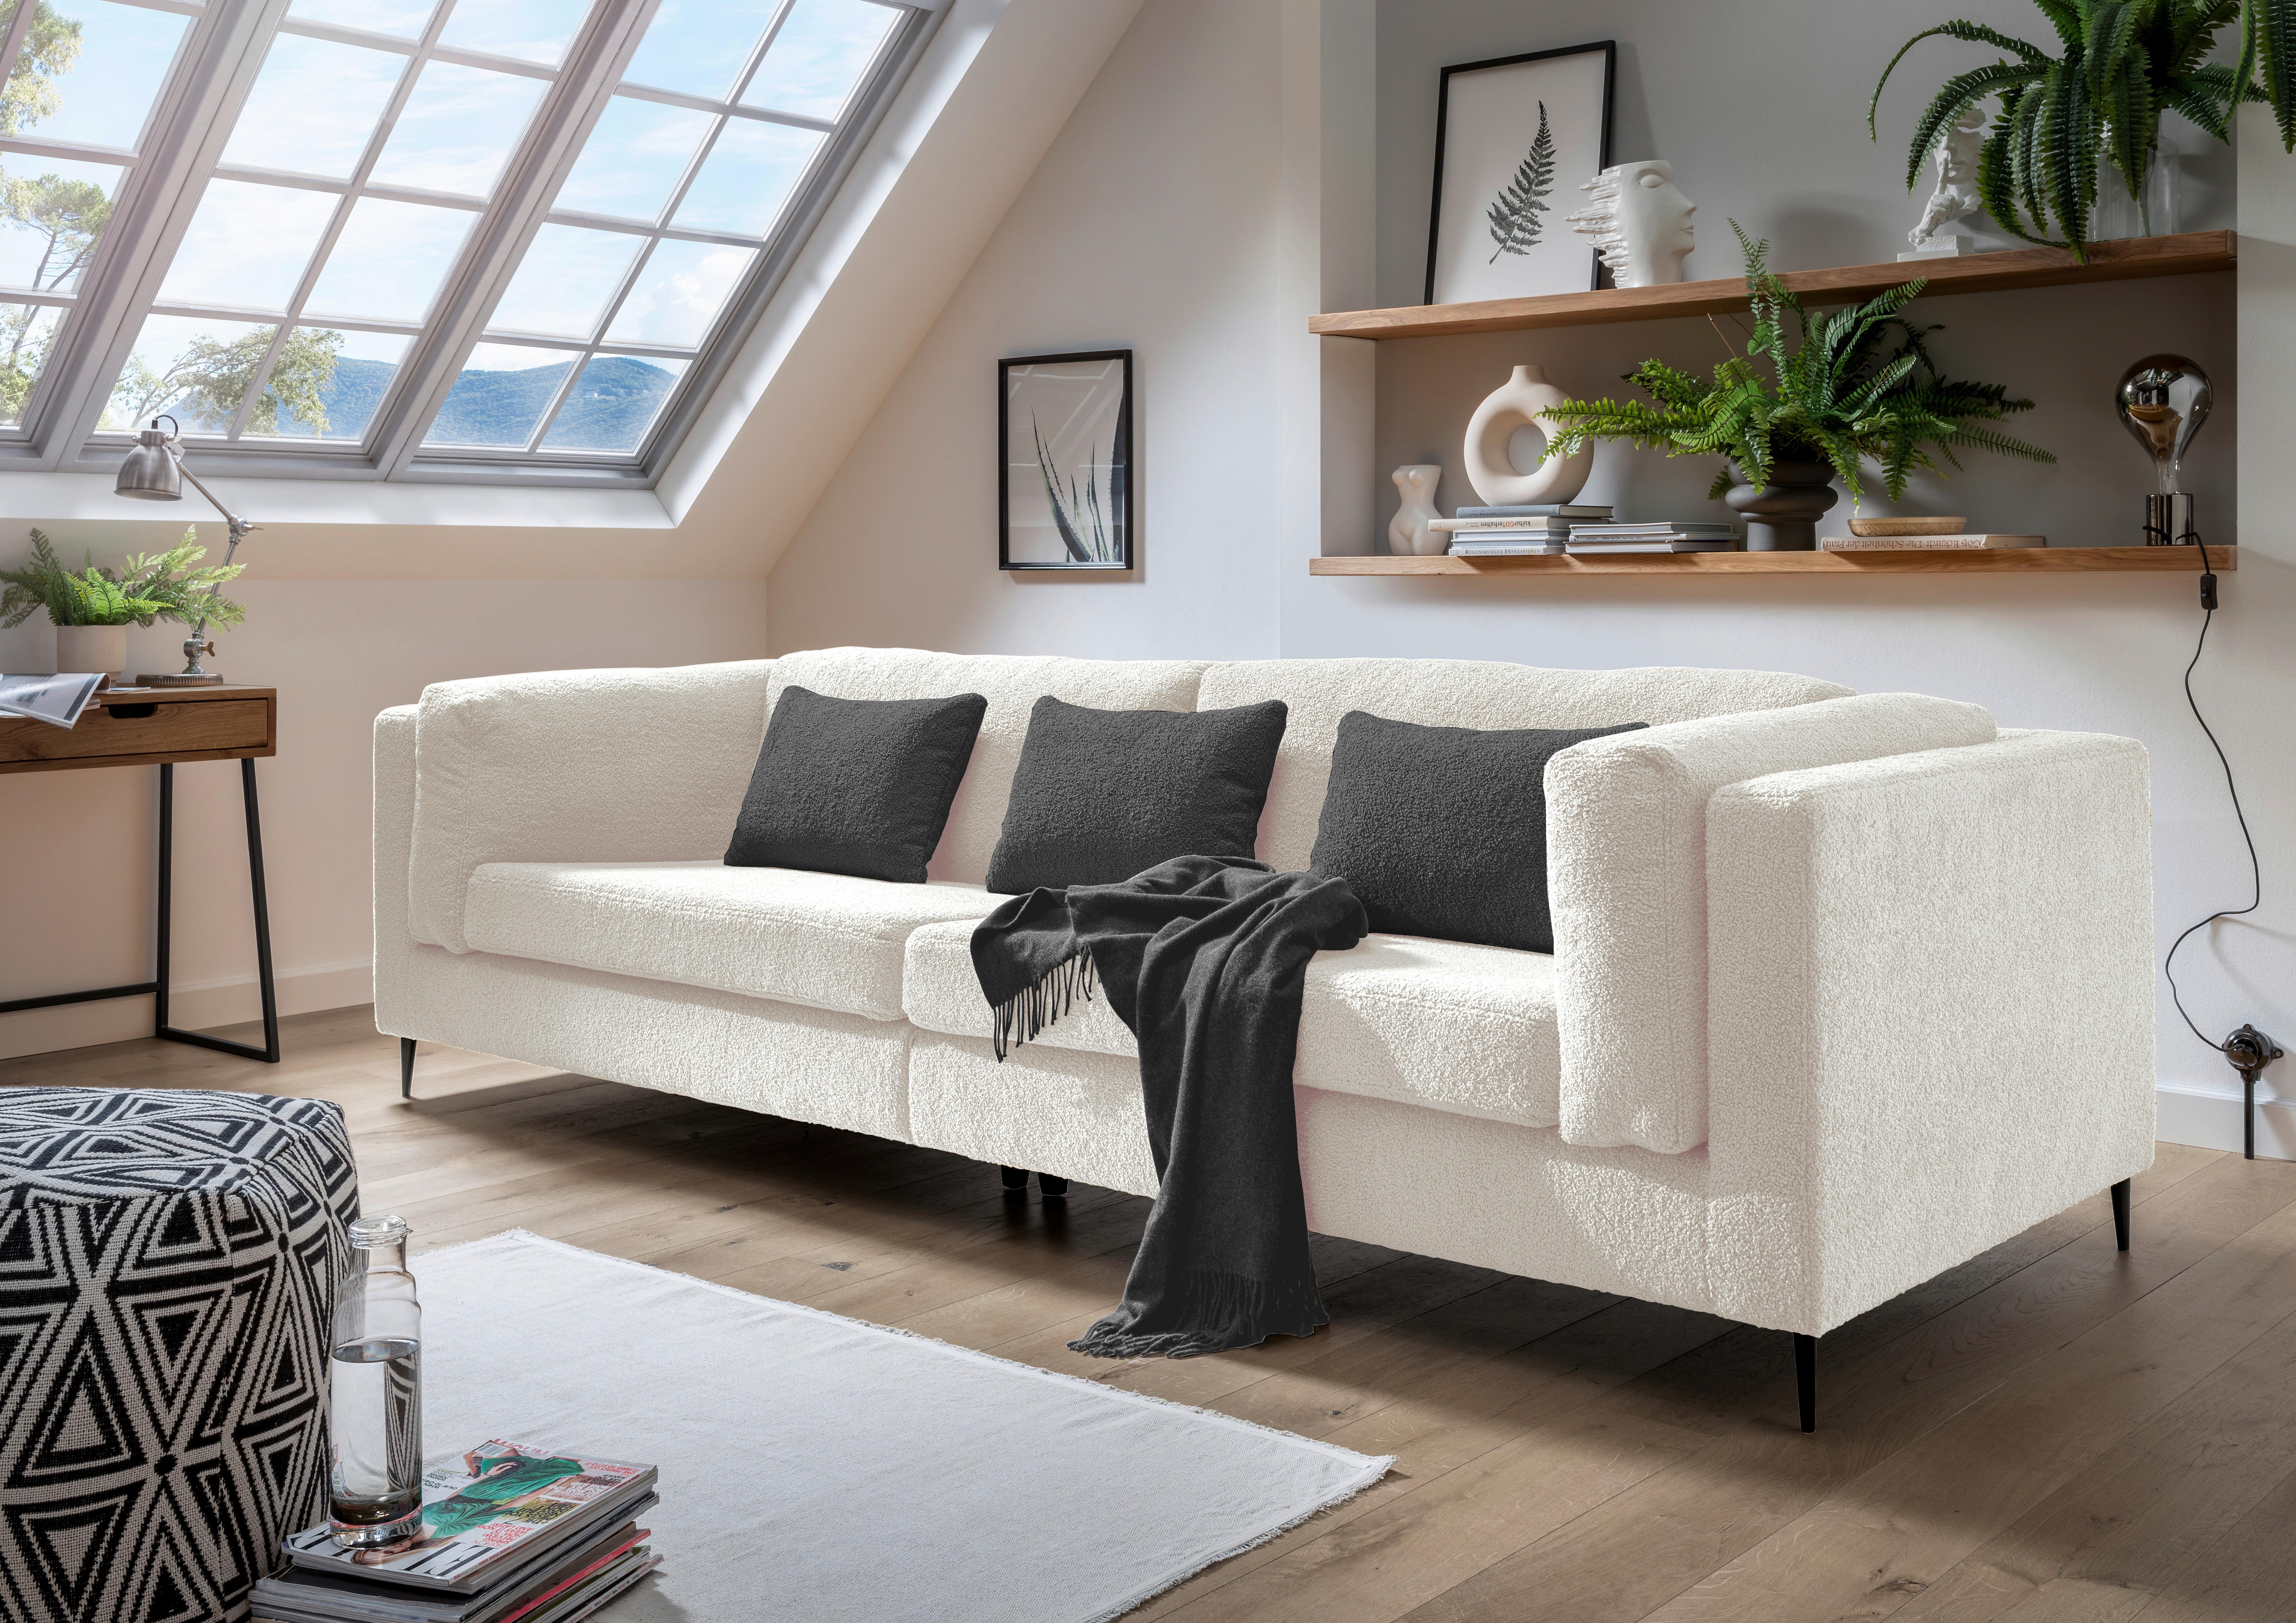 4-Sitzer-Sofa Roma Weiß Teddystoff - Anthrazit/Schwarz, Design, Textil (306/83/113cm) - Livetastic